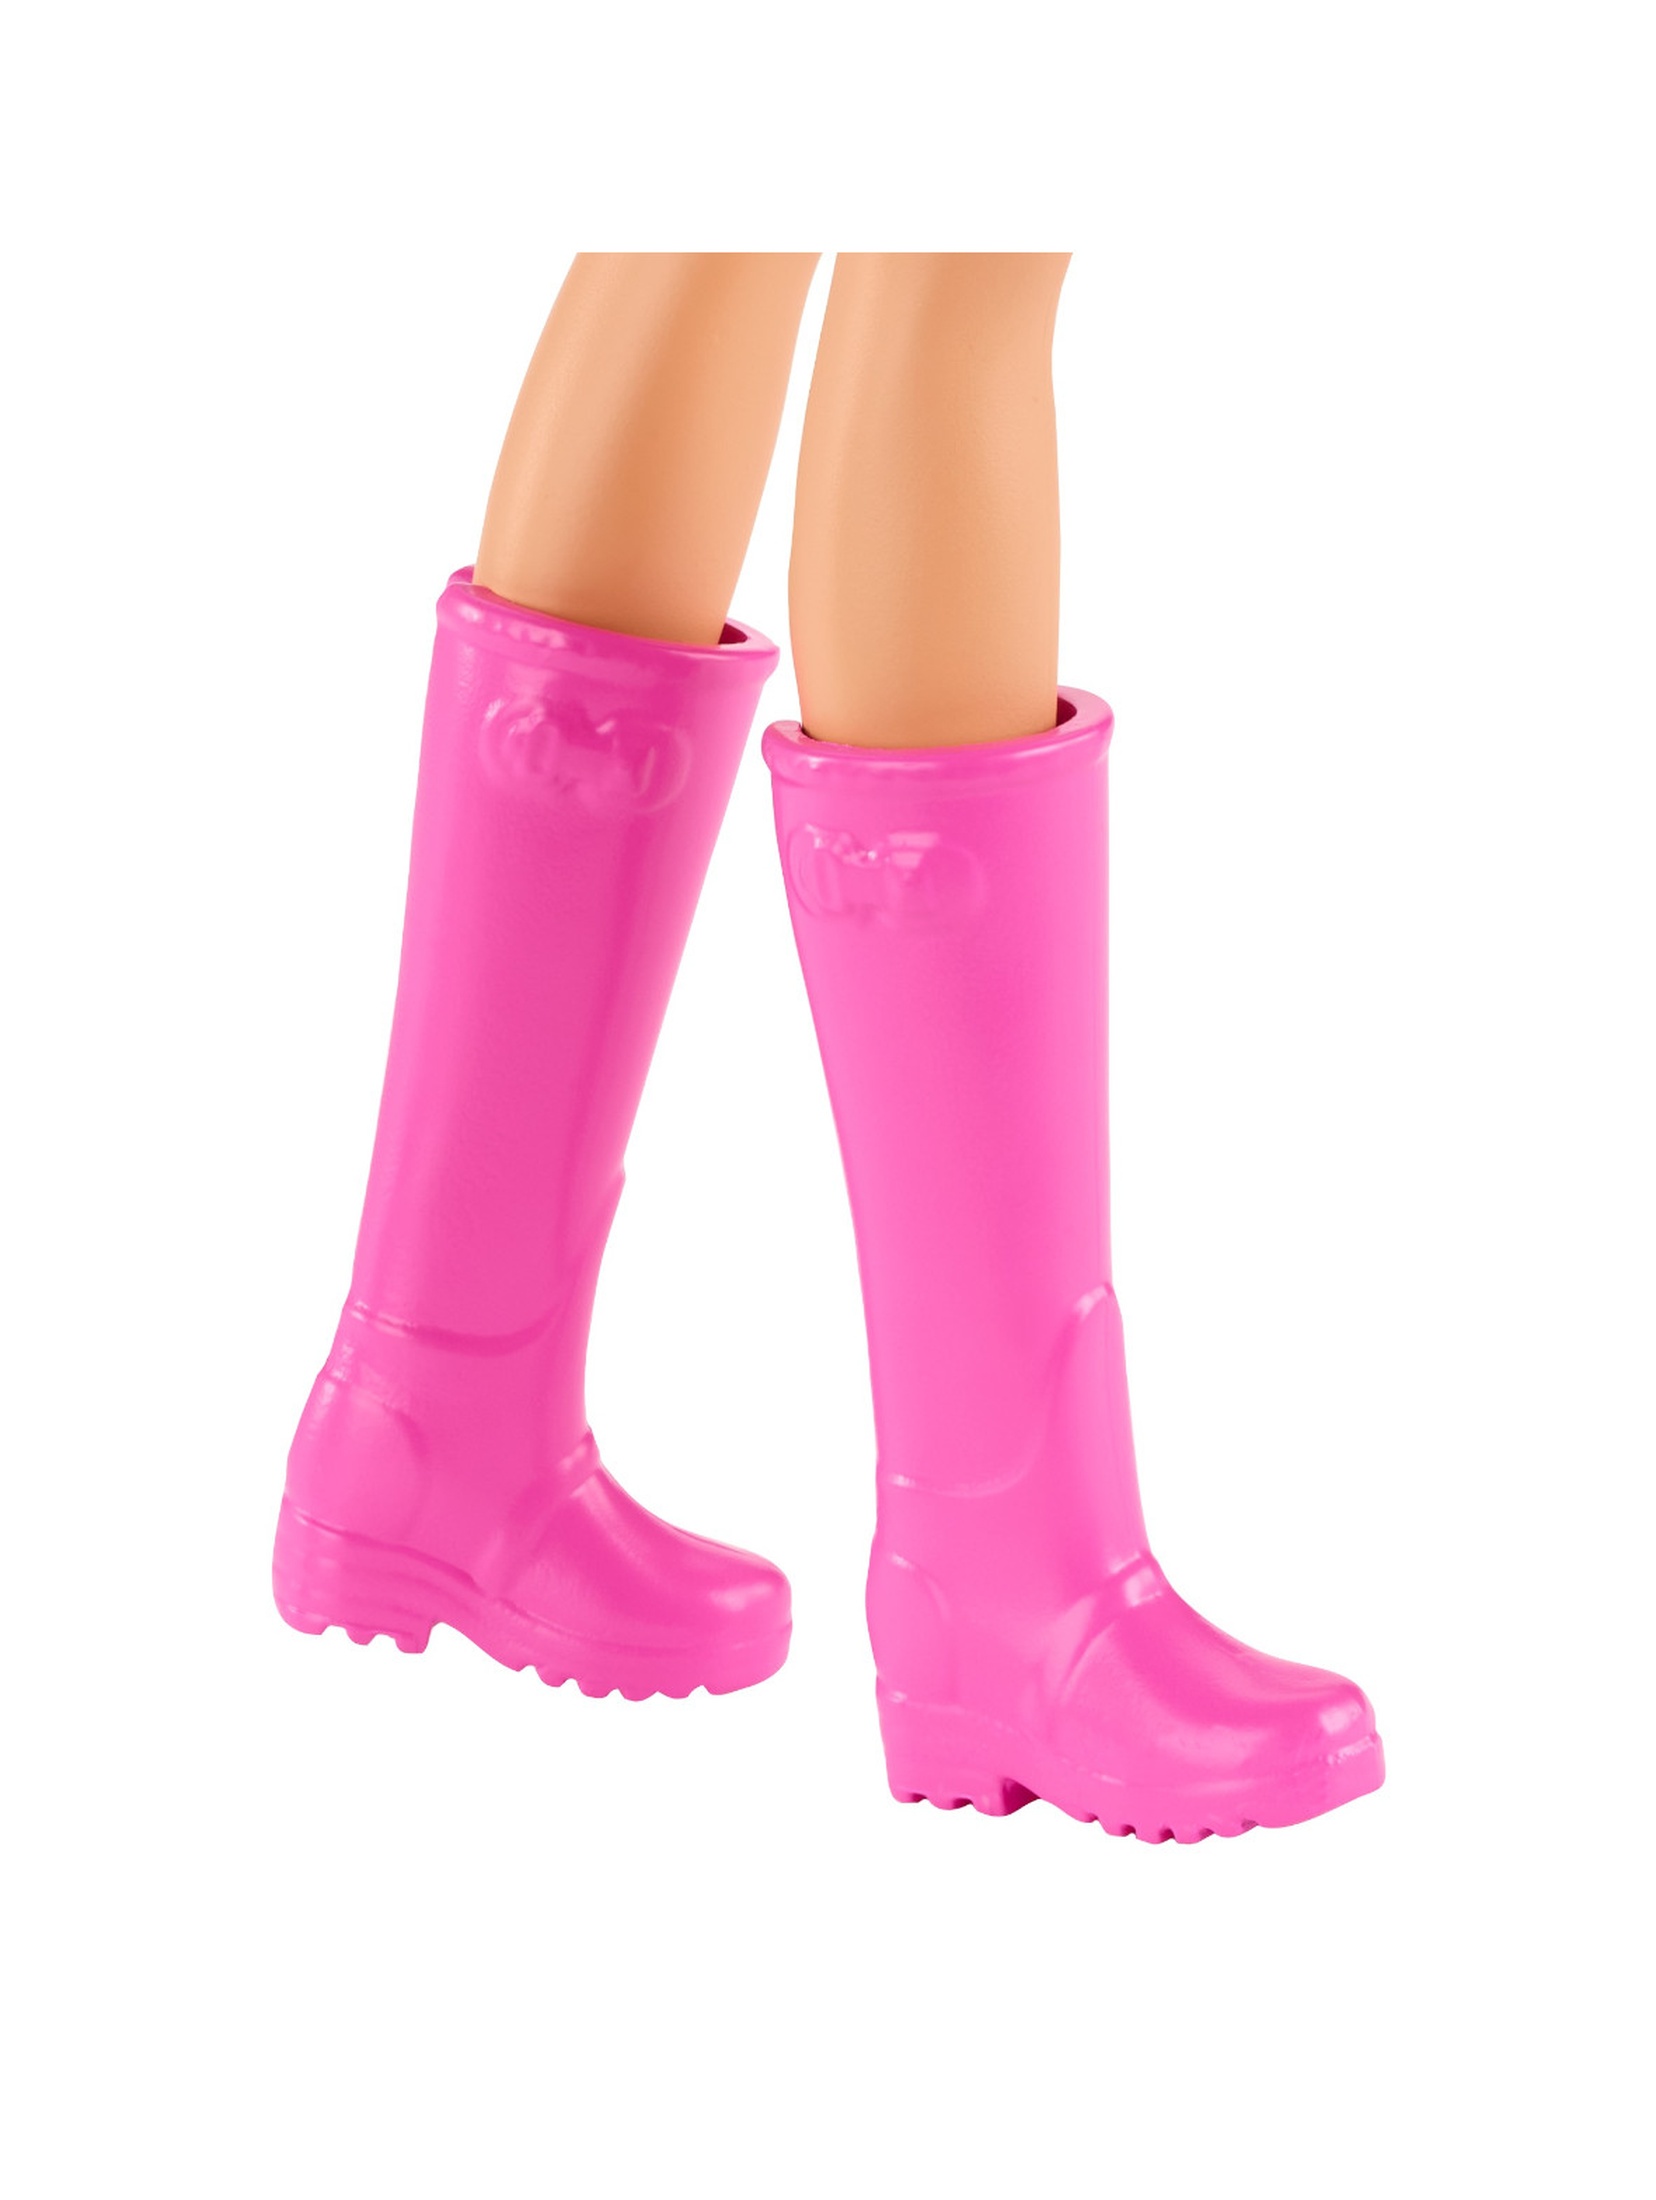 Barbie Targ farmerski Zestaw + lalka